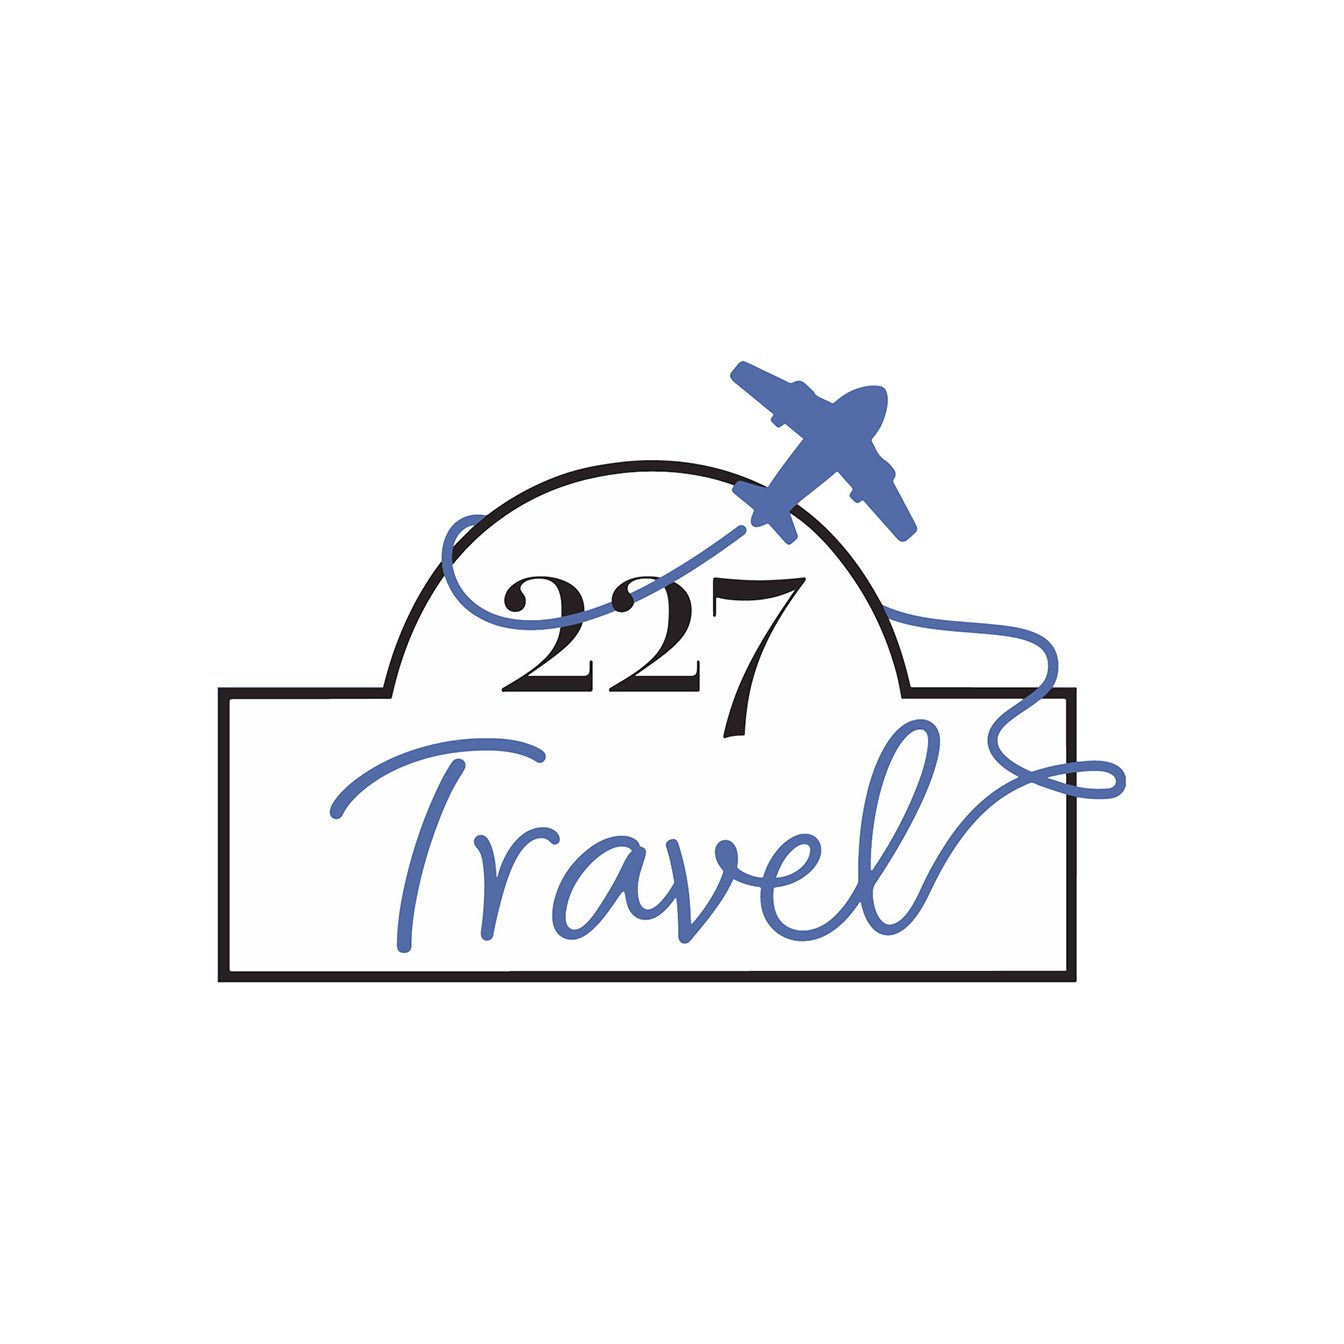 227 Travel Logo